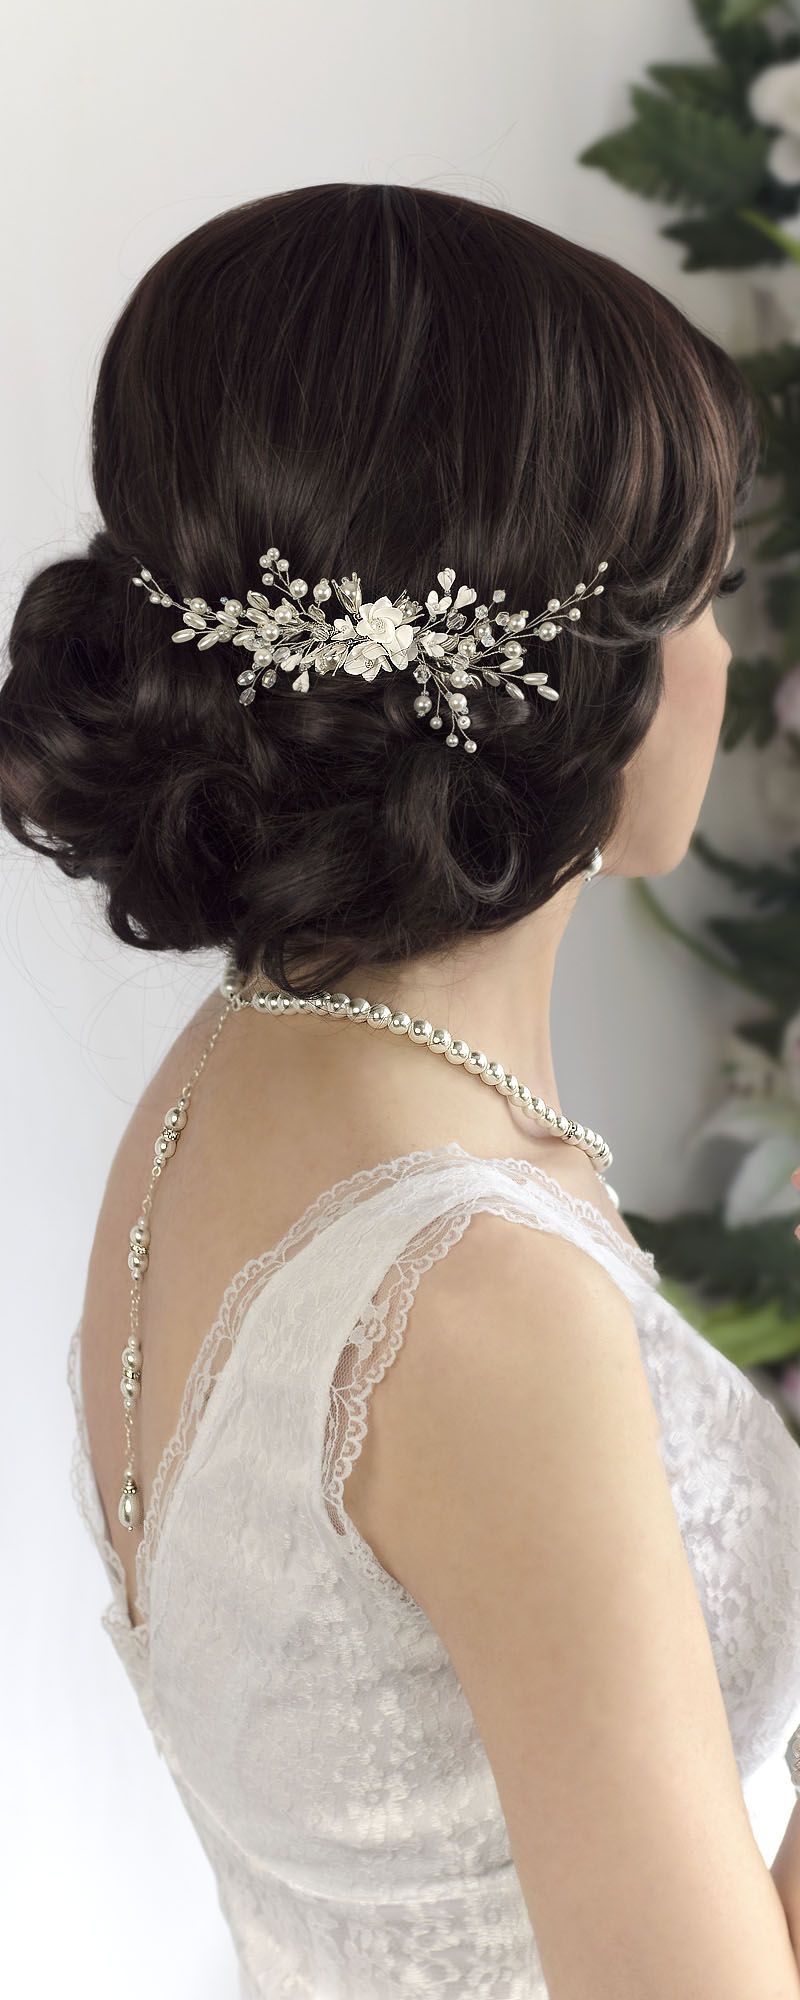 Wedding Hair Accessories For Fashion-Forward Brides